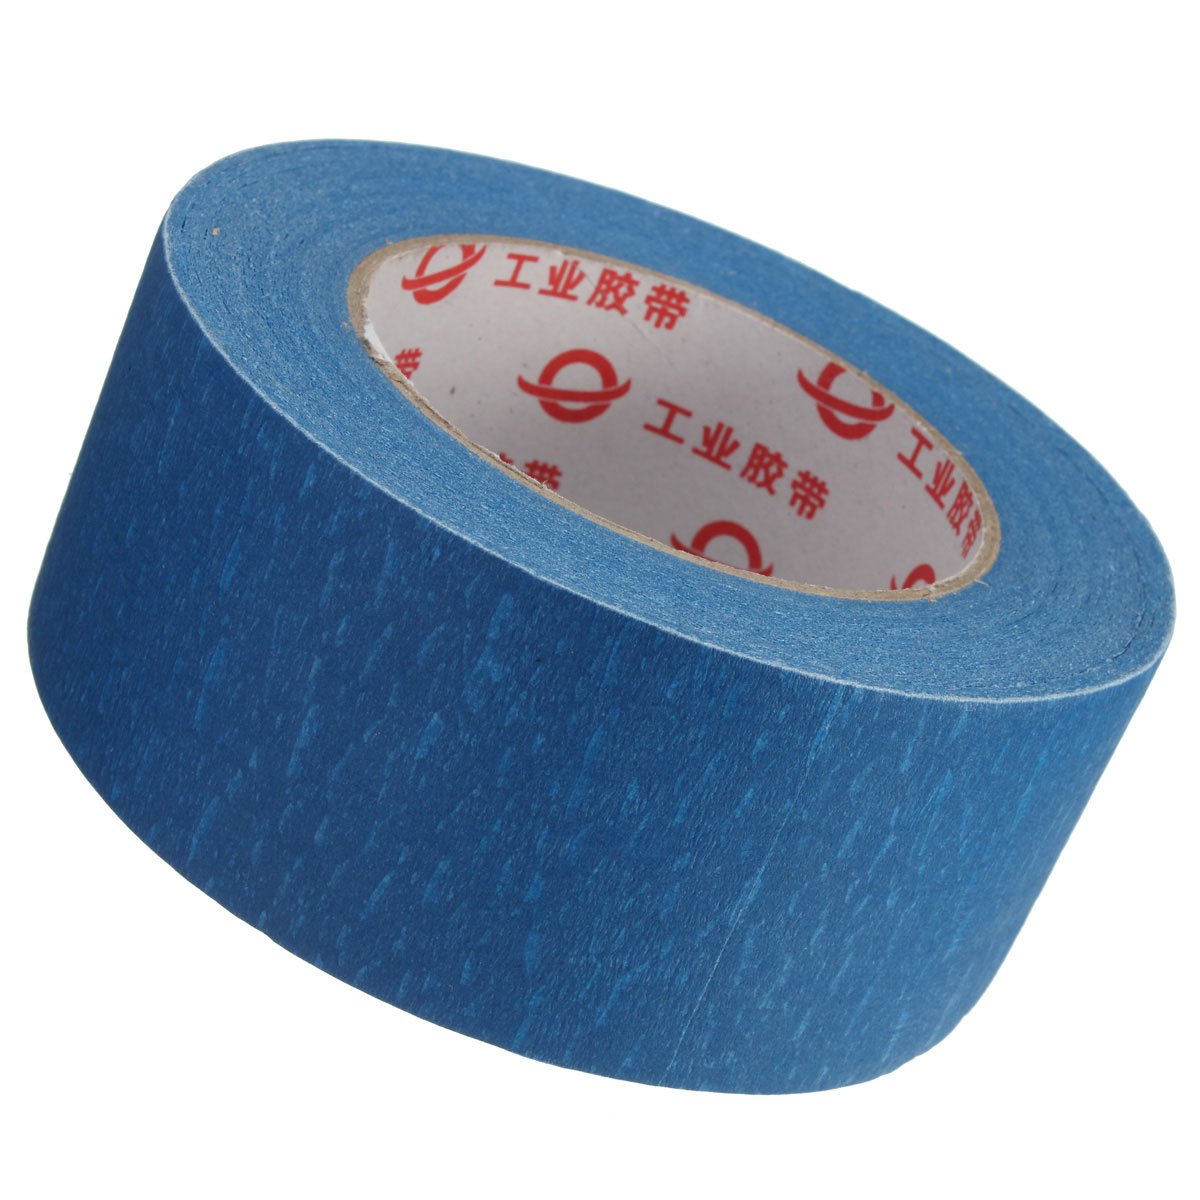 50mmx50m 50mm Wide 3D Printer Blue Tape Reprap Bed Tape Masking Tape For 3D Printer Parts 2